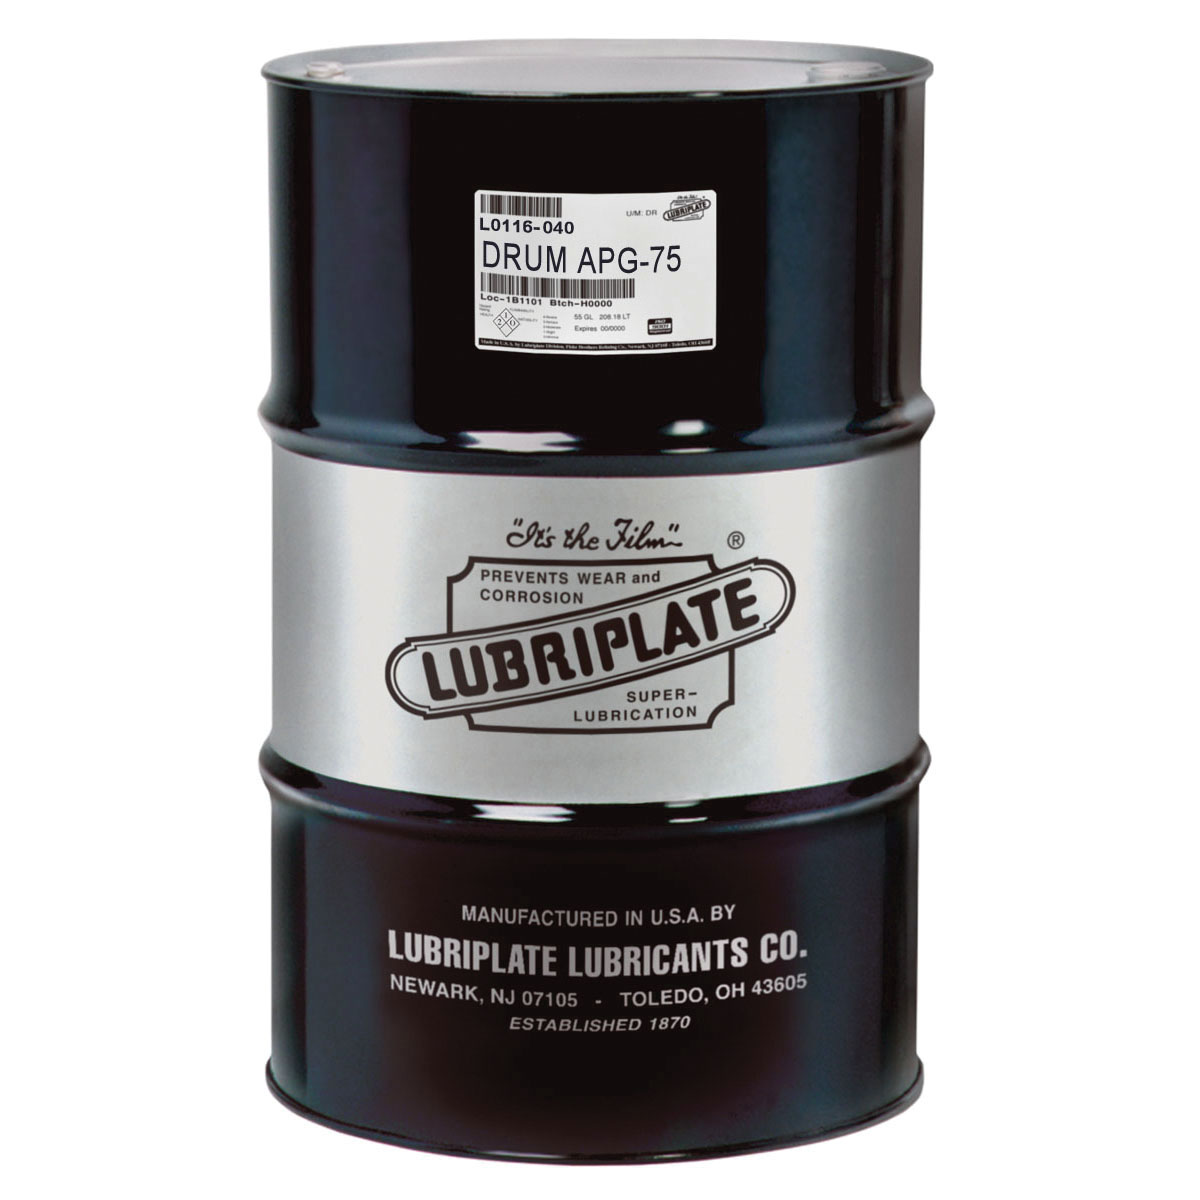 Lubriplate® L0116-040 APG-75 Petroleum Based Gear Oil, 415 lb Drum, Additive Odor/Scent, Liquid Form, ISO 32/SAE 75W Grade, Amber